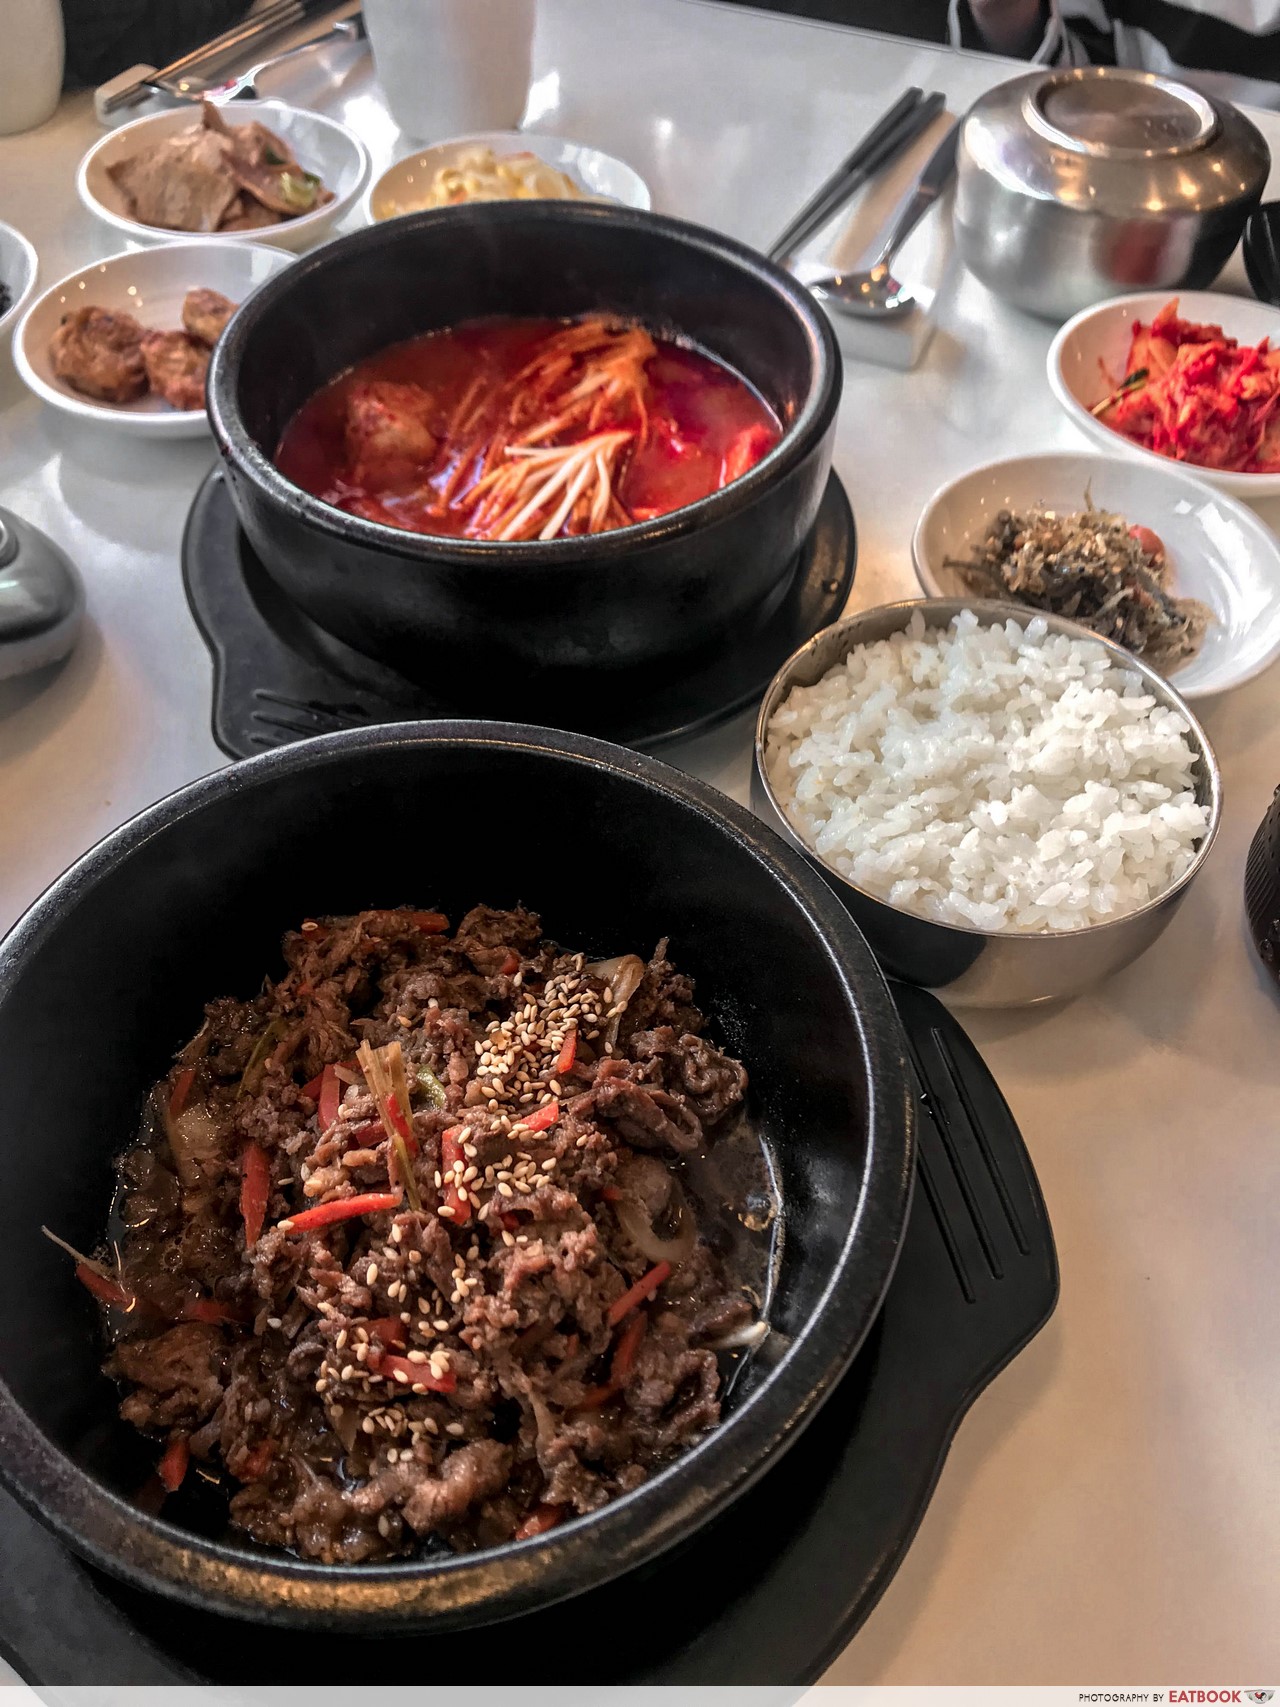 Halal Food places In Seoul - Makan Halal Food Restaurant